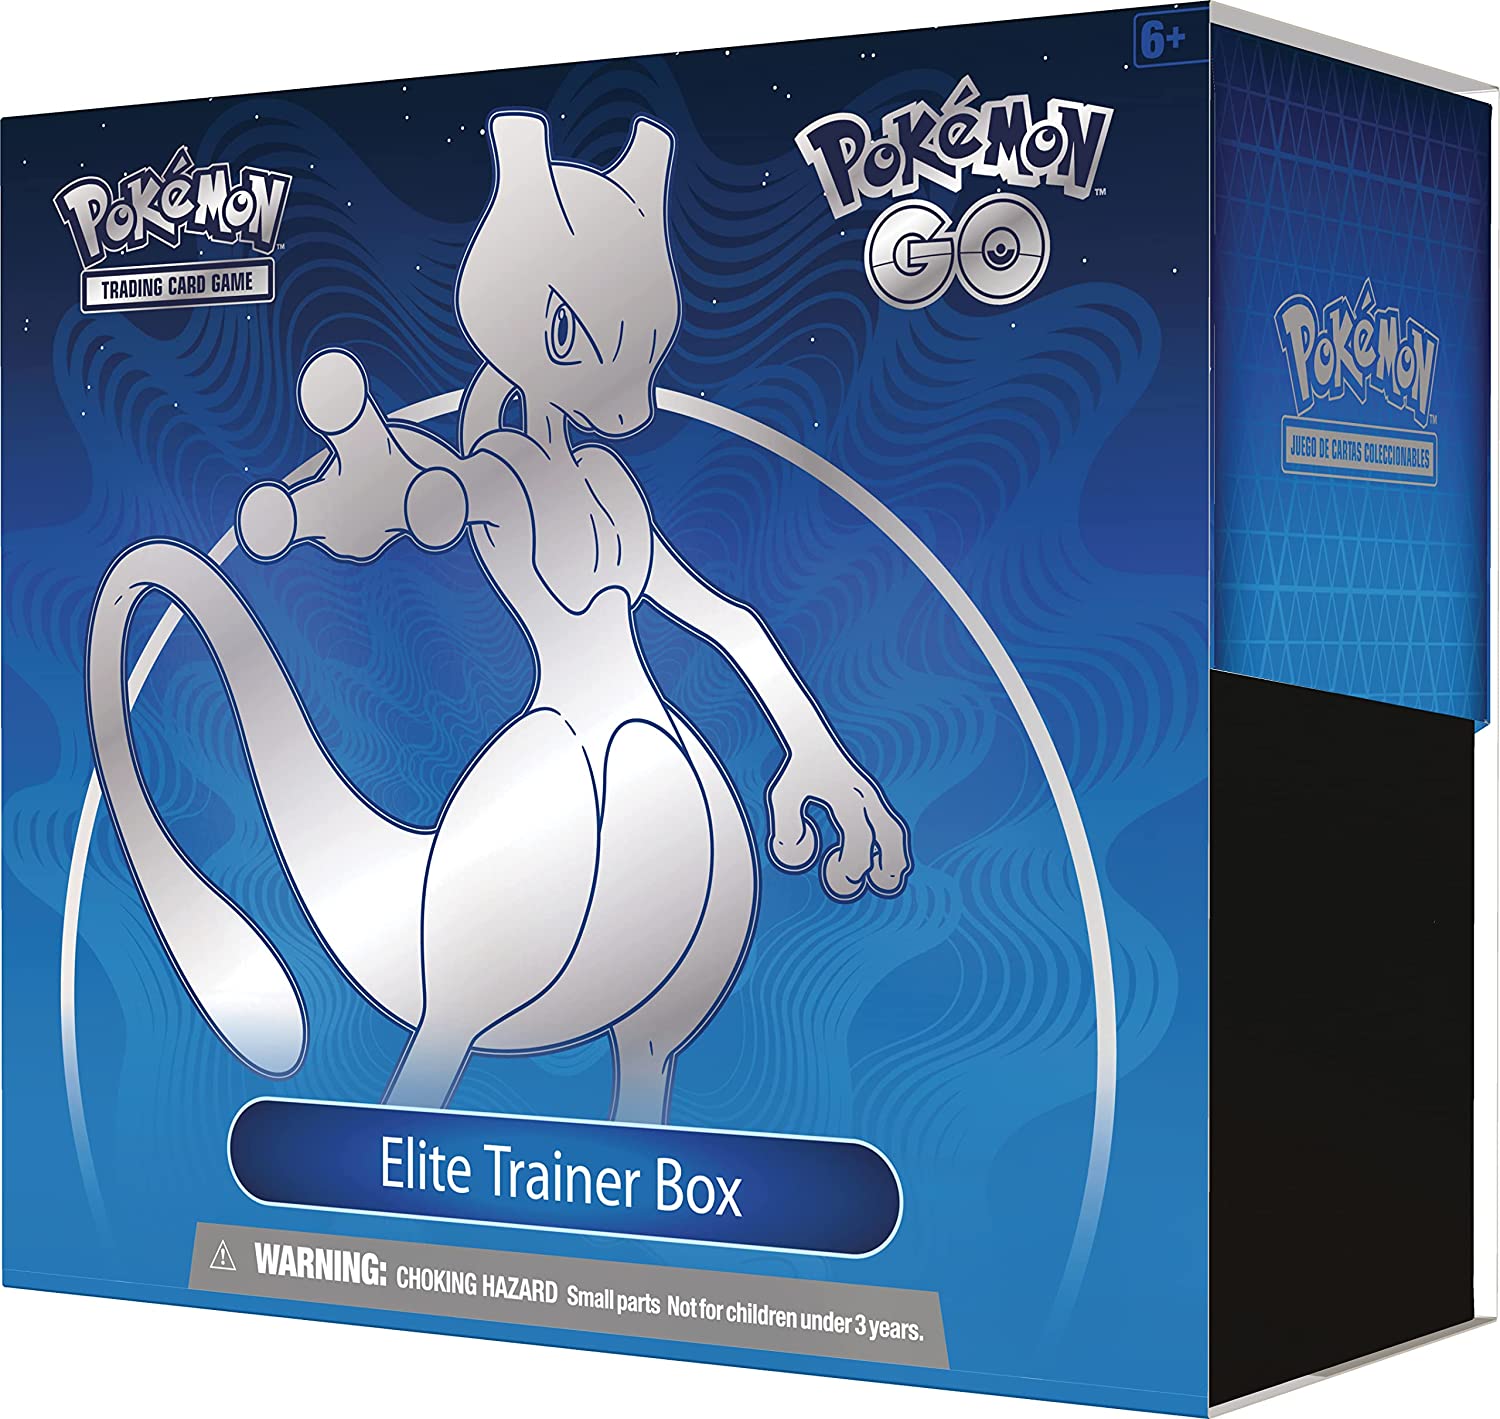 Pokémon Trading Card Game: Pokémon Go Wave 1 Elite Trainer Box - image 3 of 6